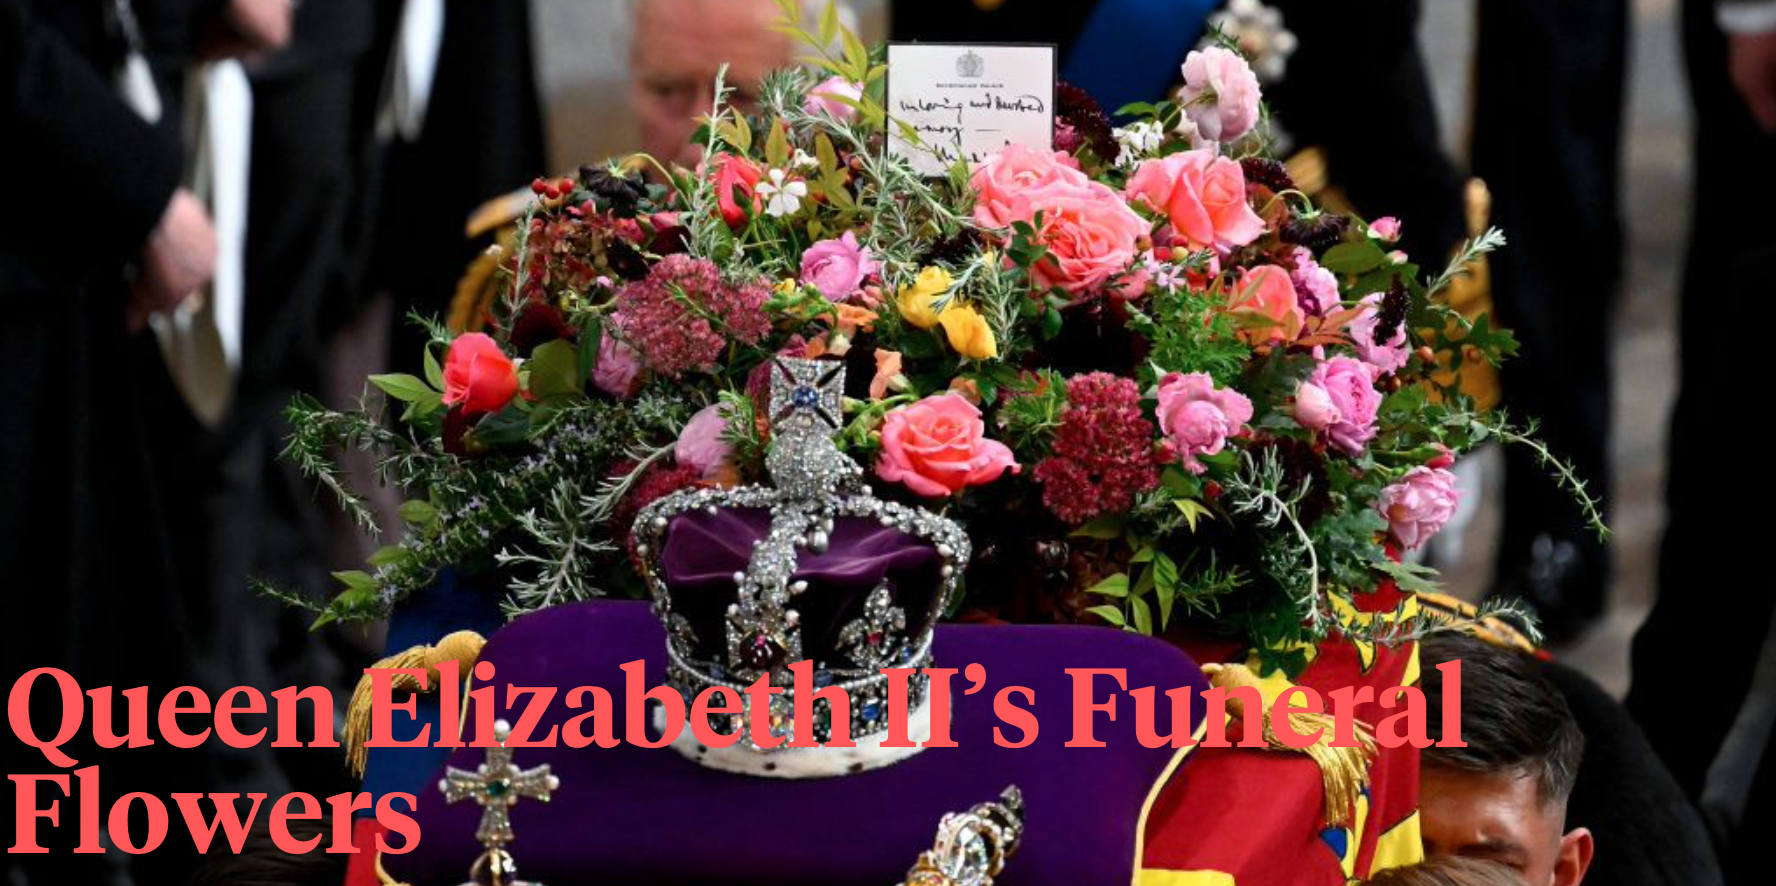 Queen Elizabeth Funeral Flowers - Article onThursd